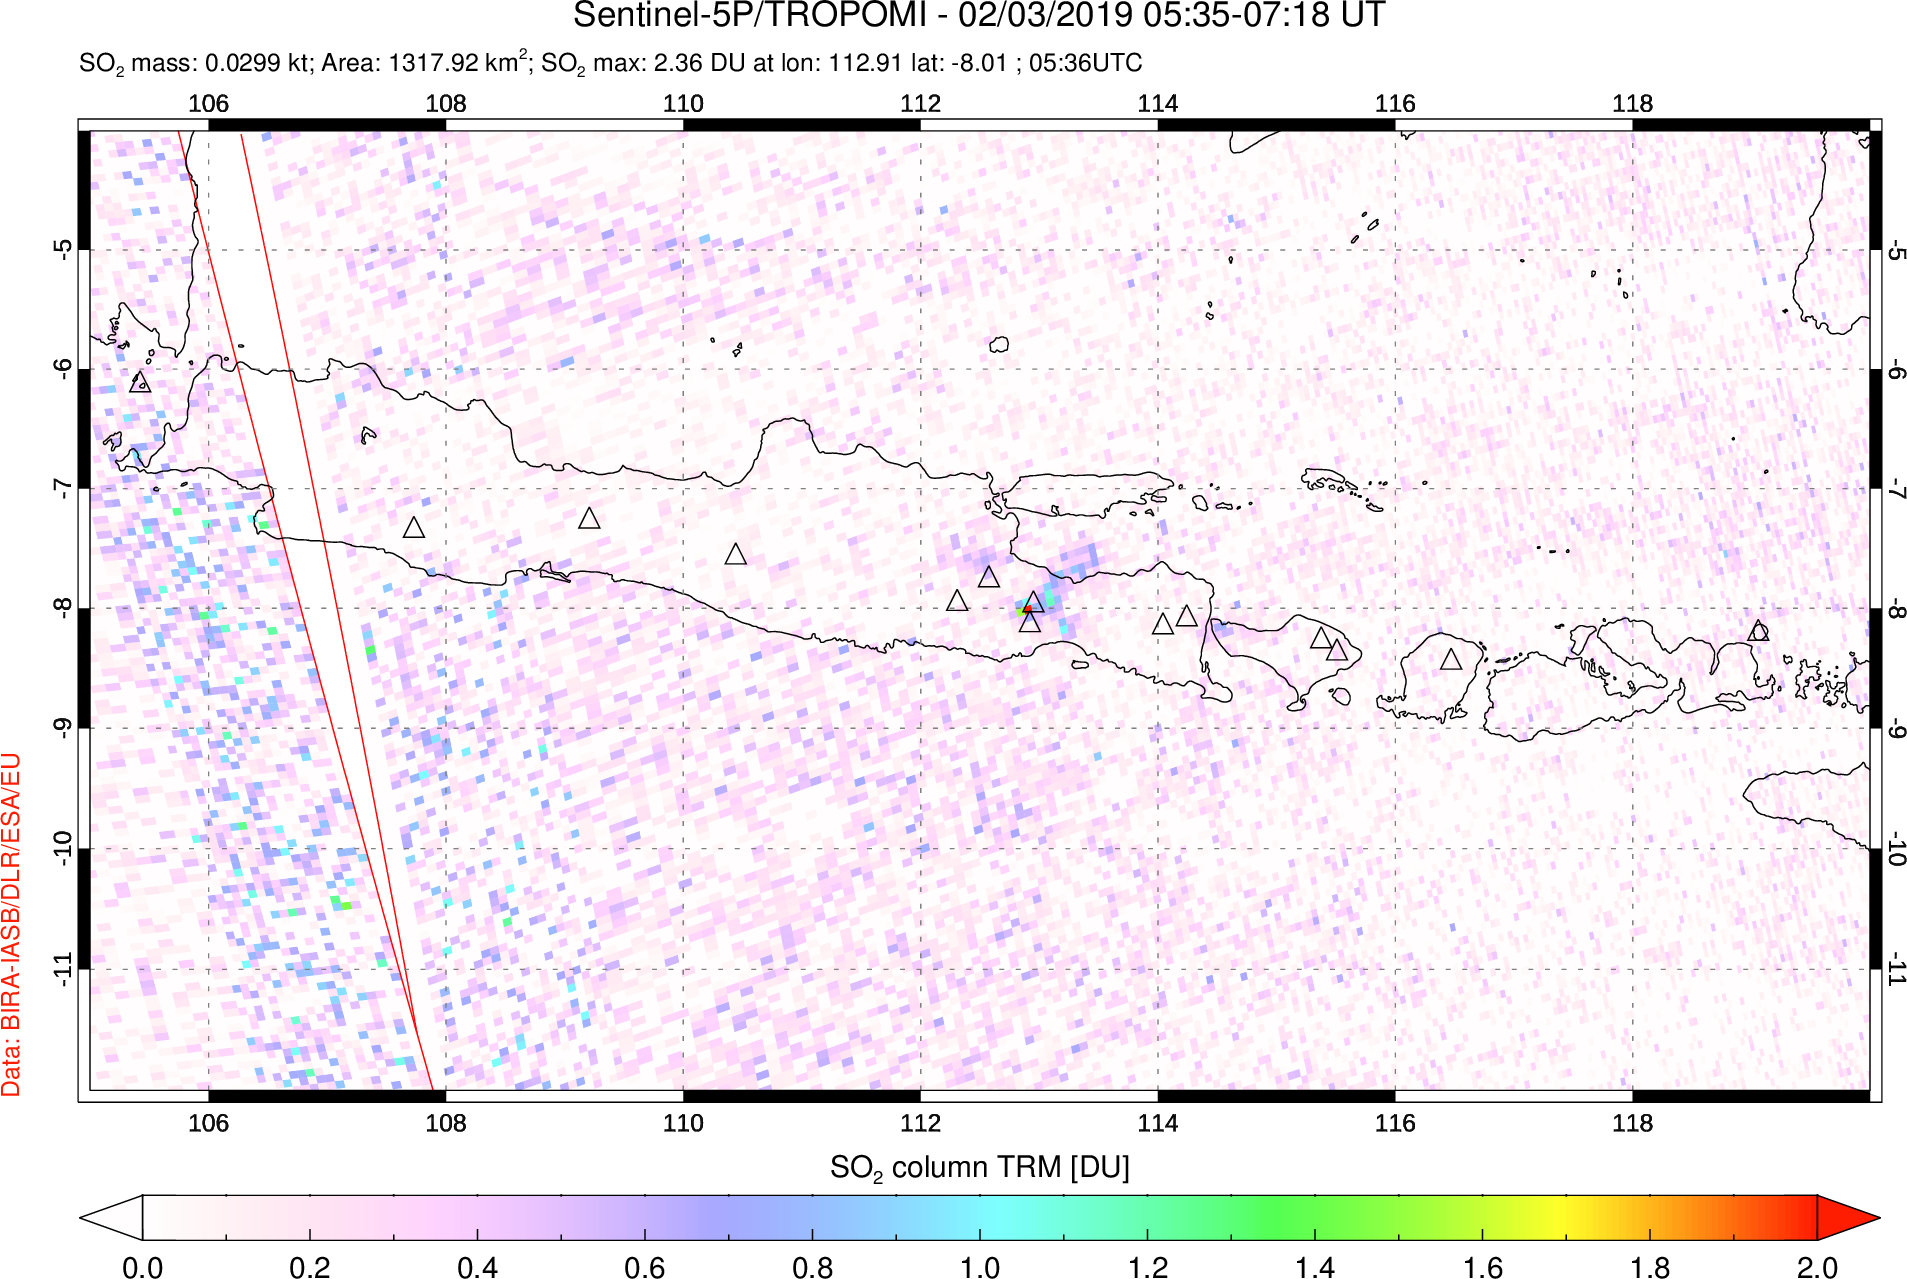 A sulfur dioxide image over Java, Indonesia on Feb 03, 2019.